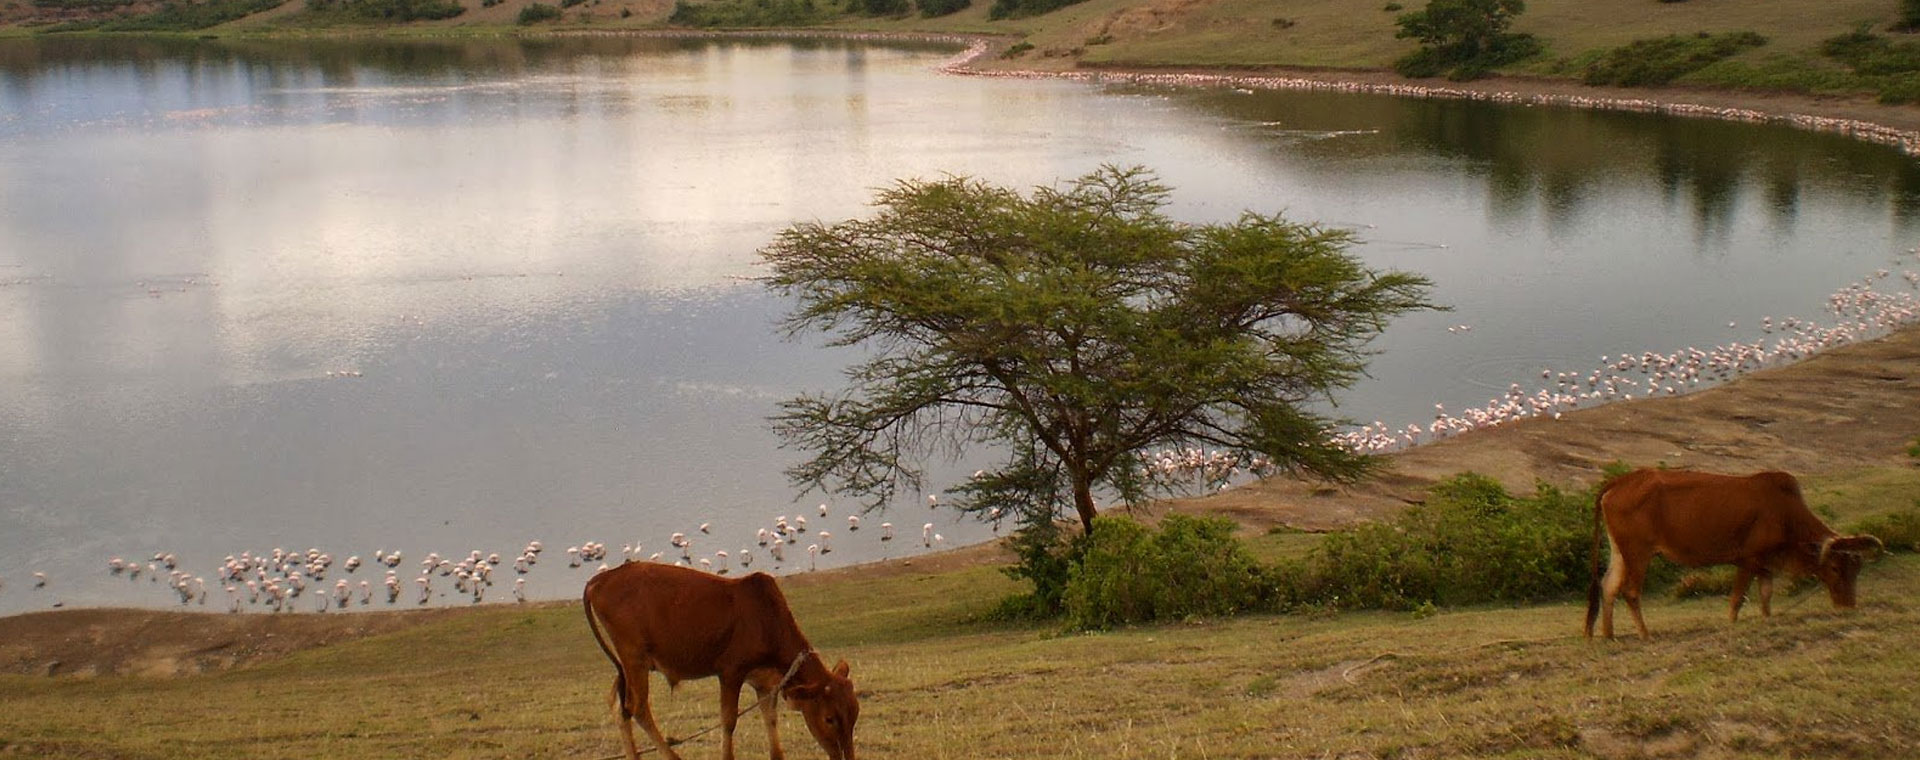 Lake Simbi National Santuary 